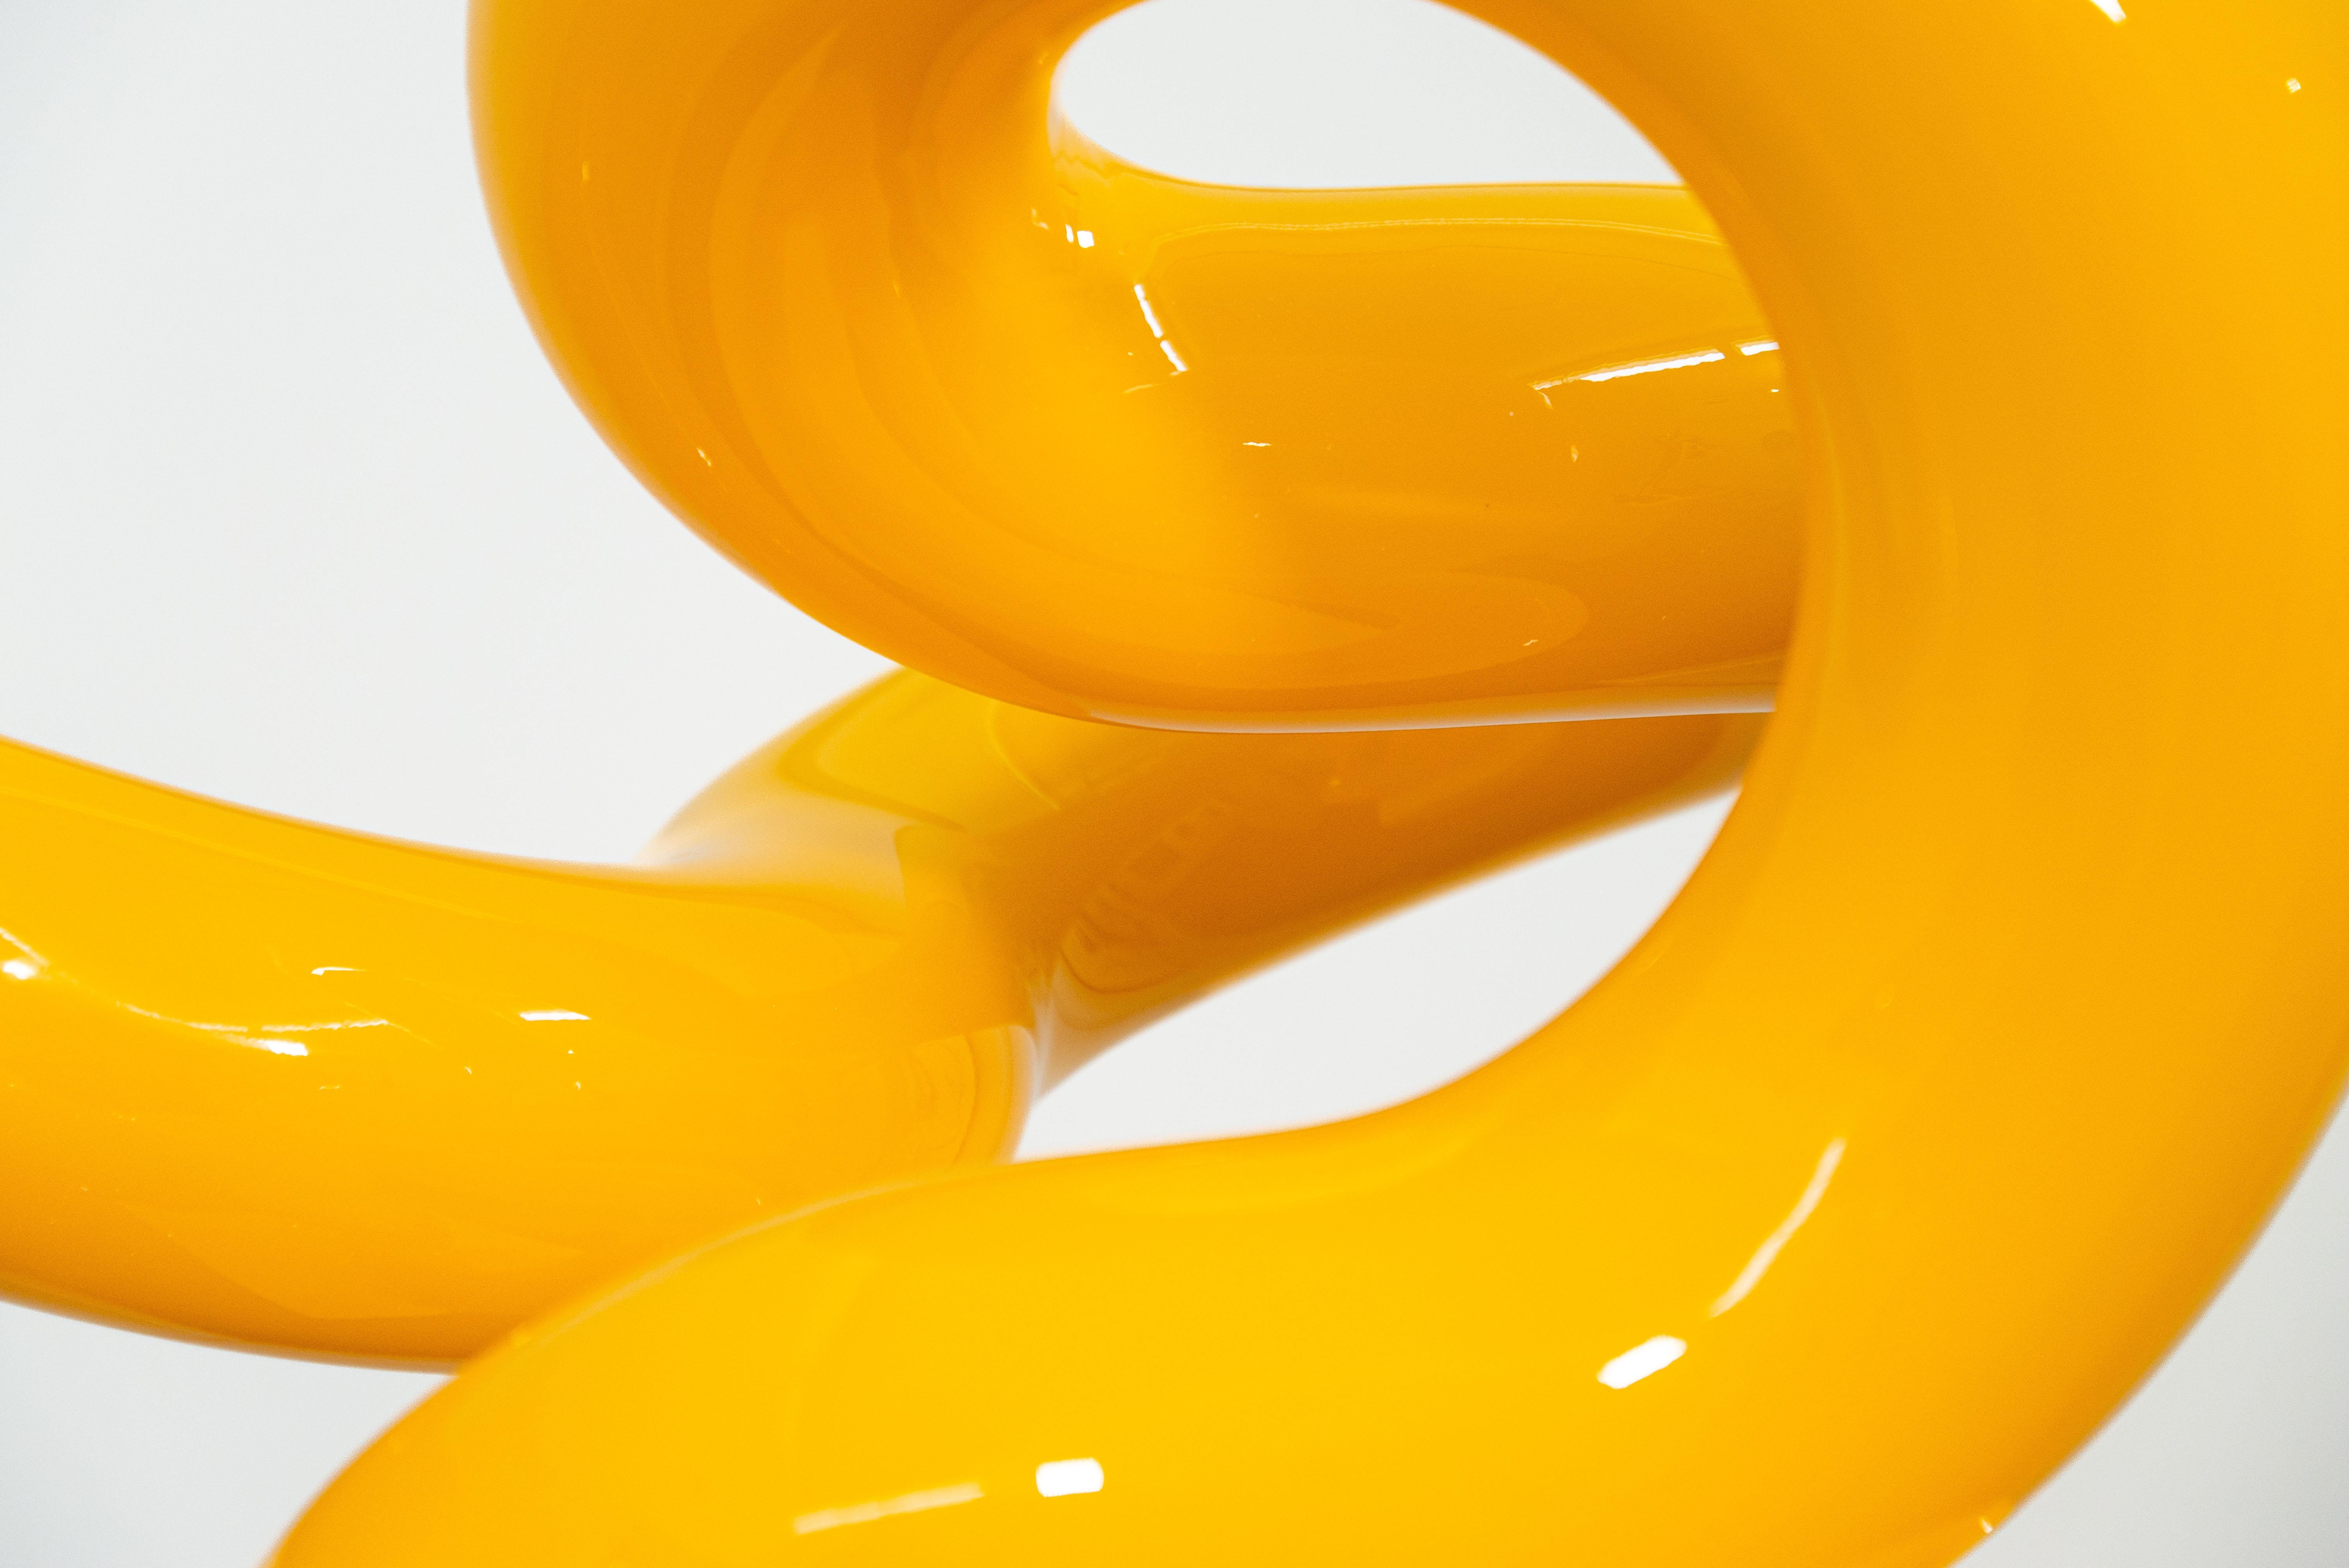 Circuit jaune - sculpture en acier inoxydable poli, abstraite et peinte en vente 4